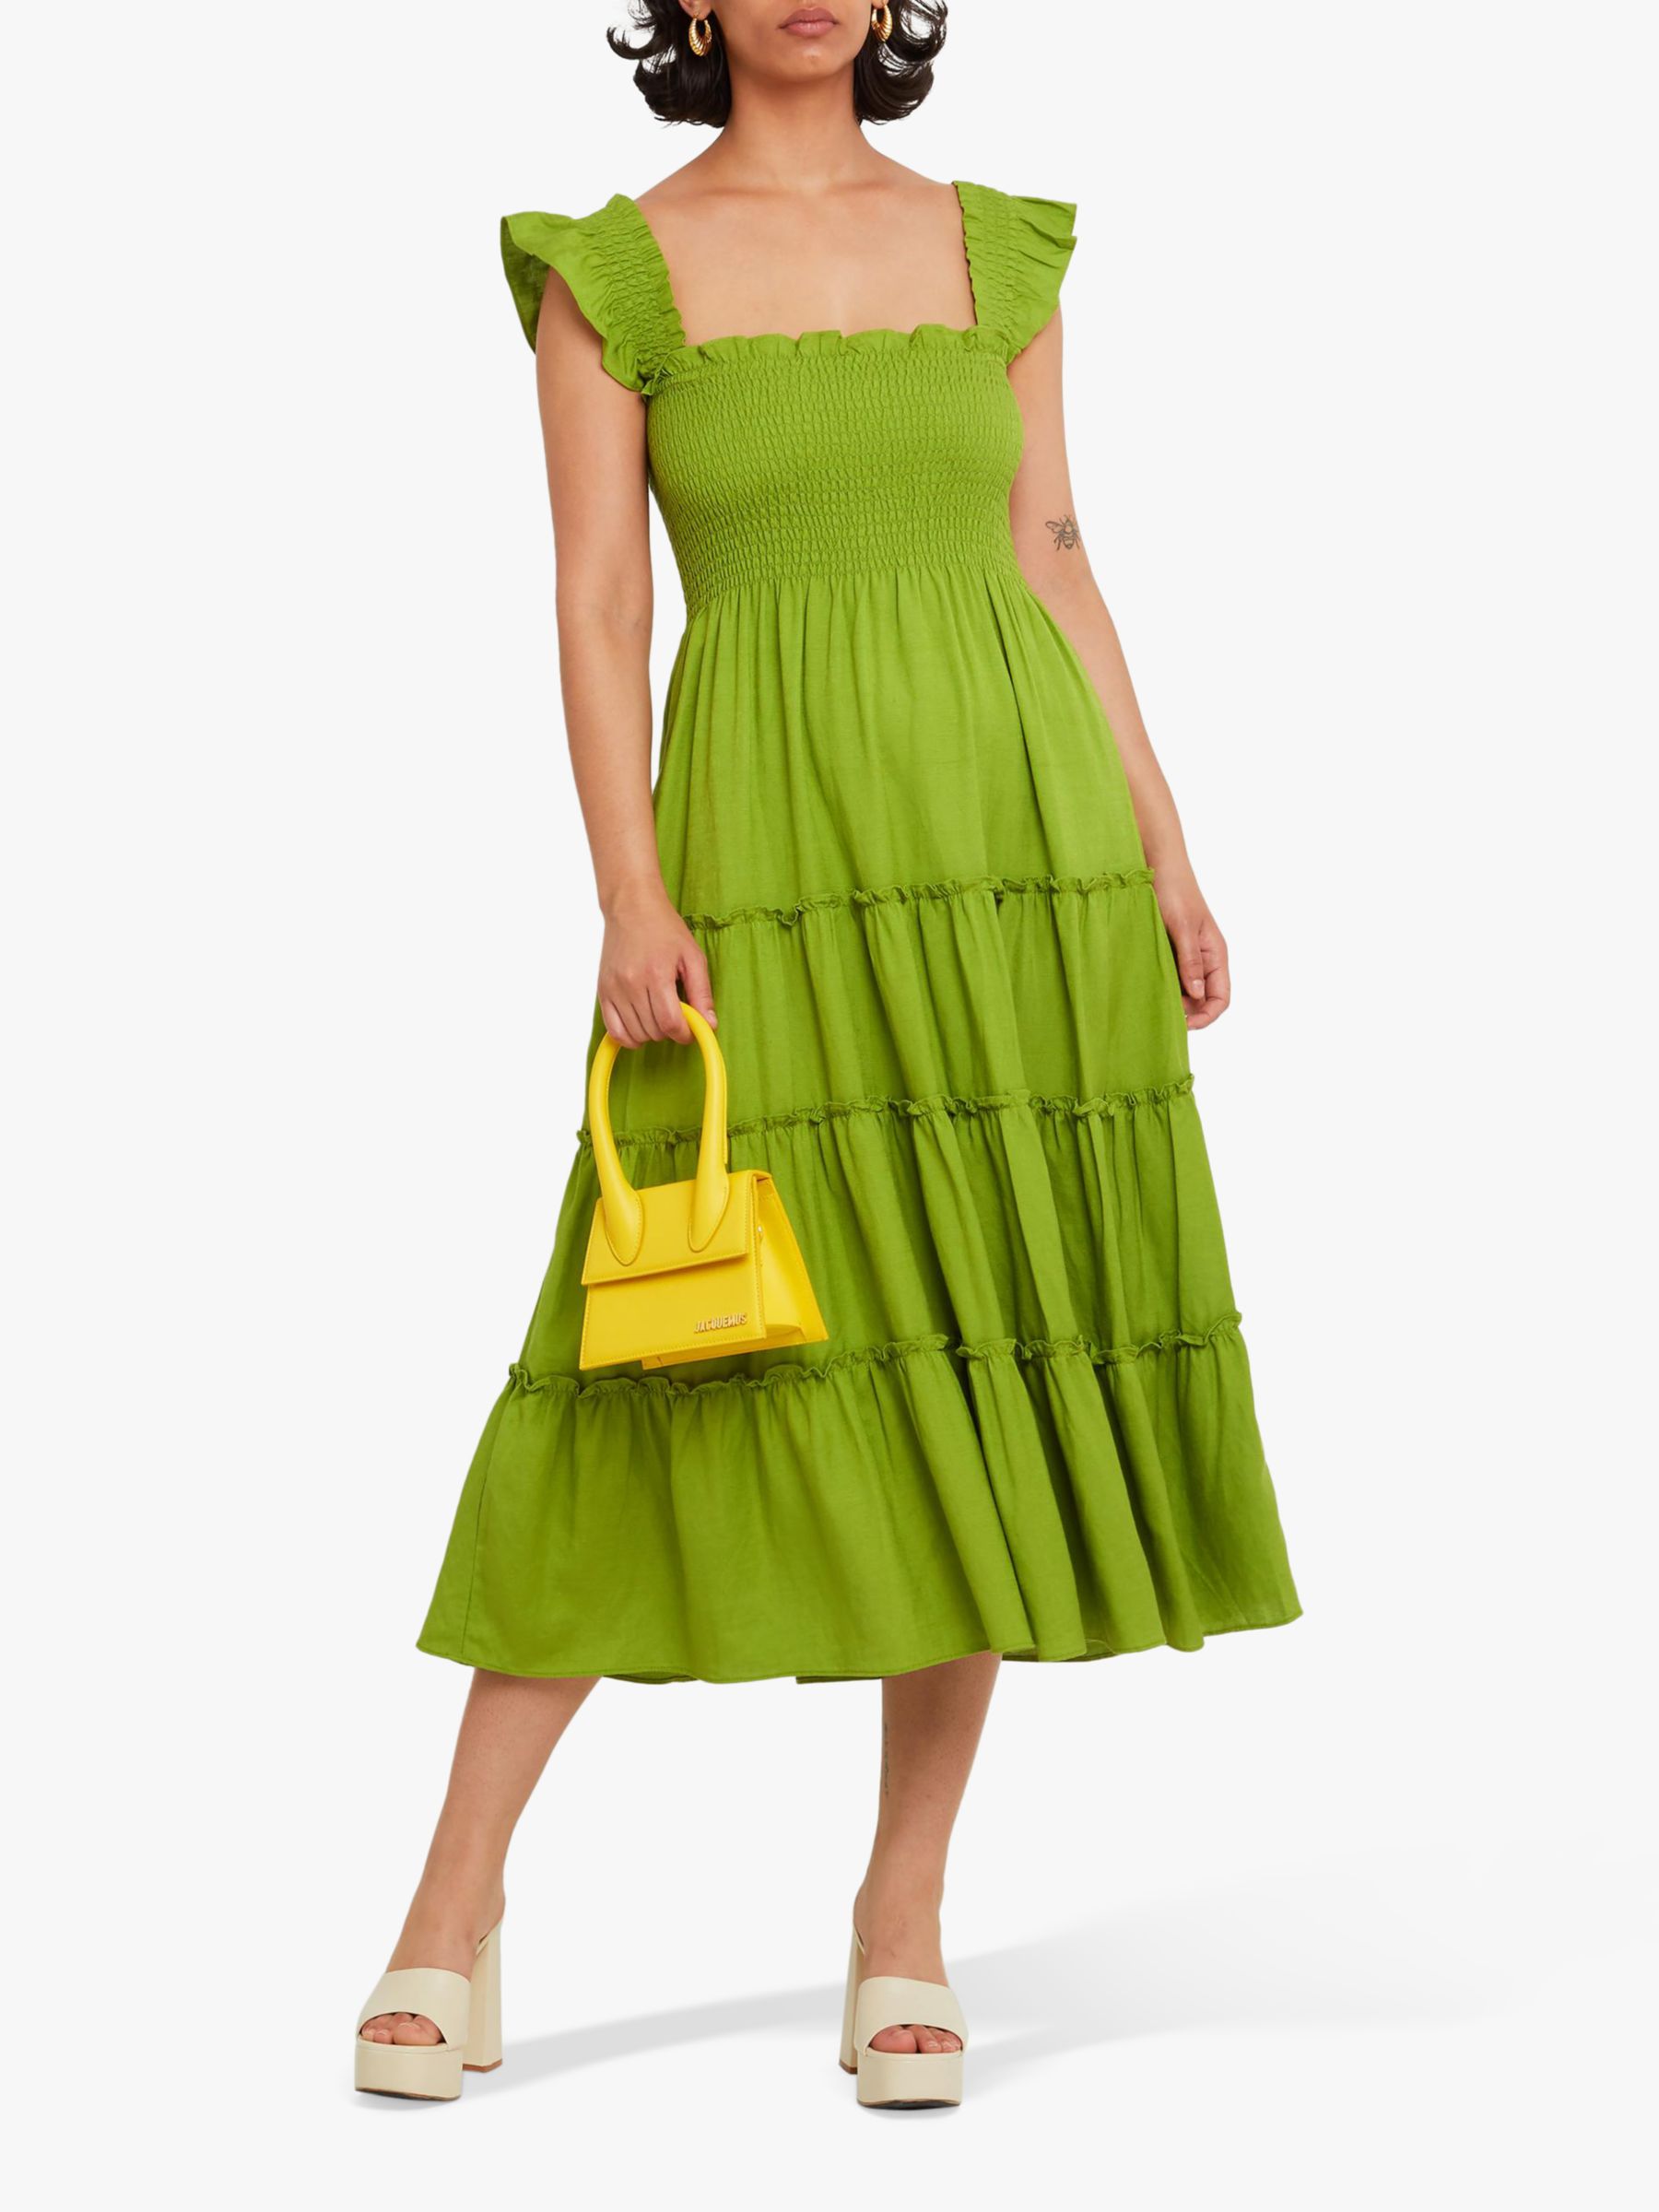 kourt Calypso Midi Dress, Green, XS